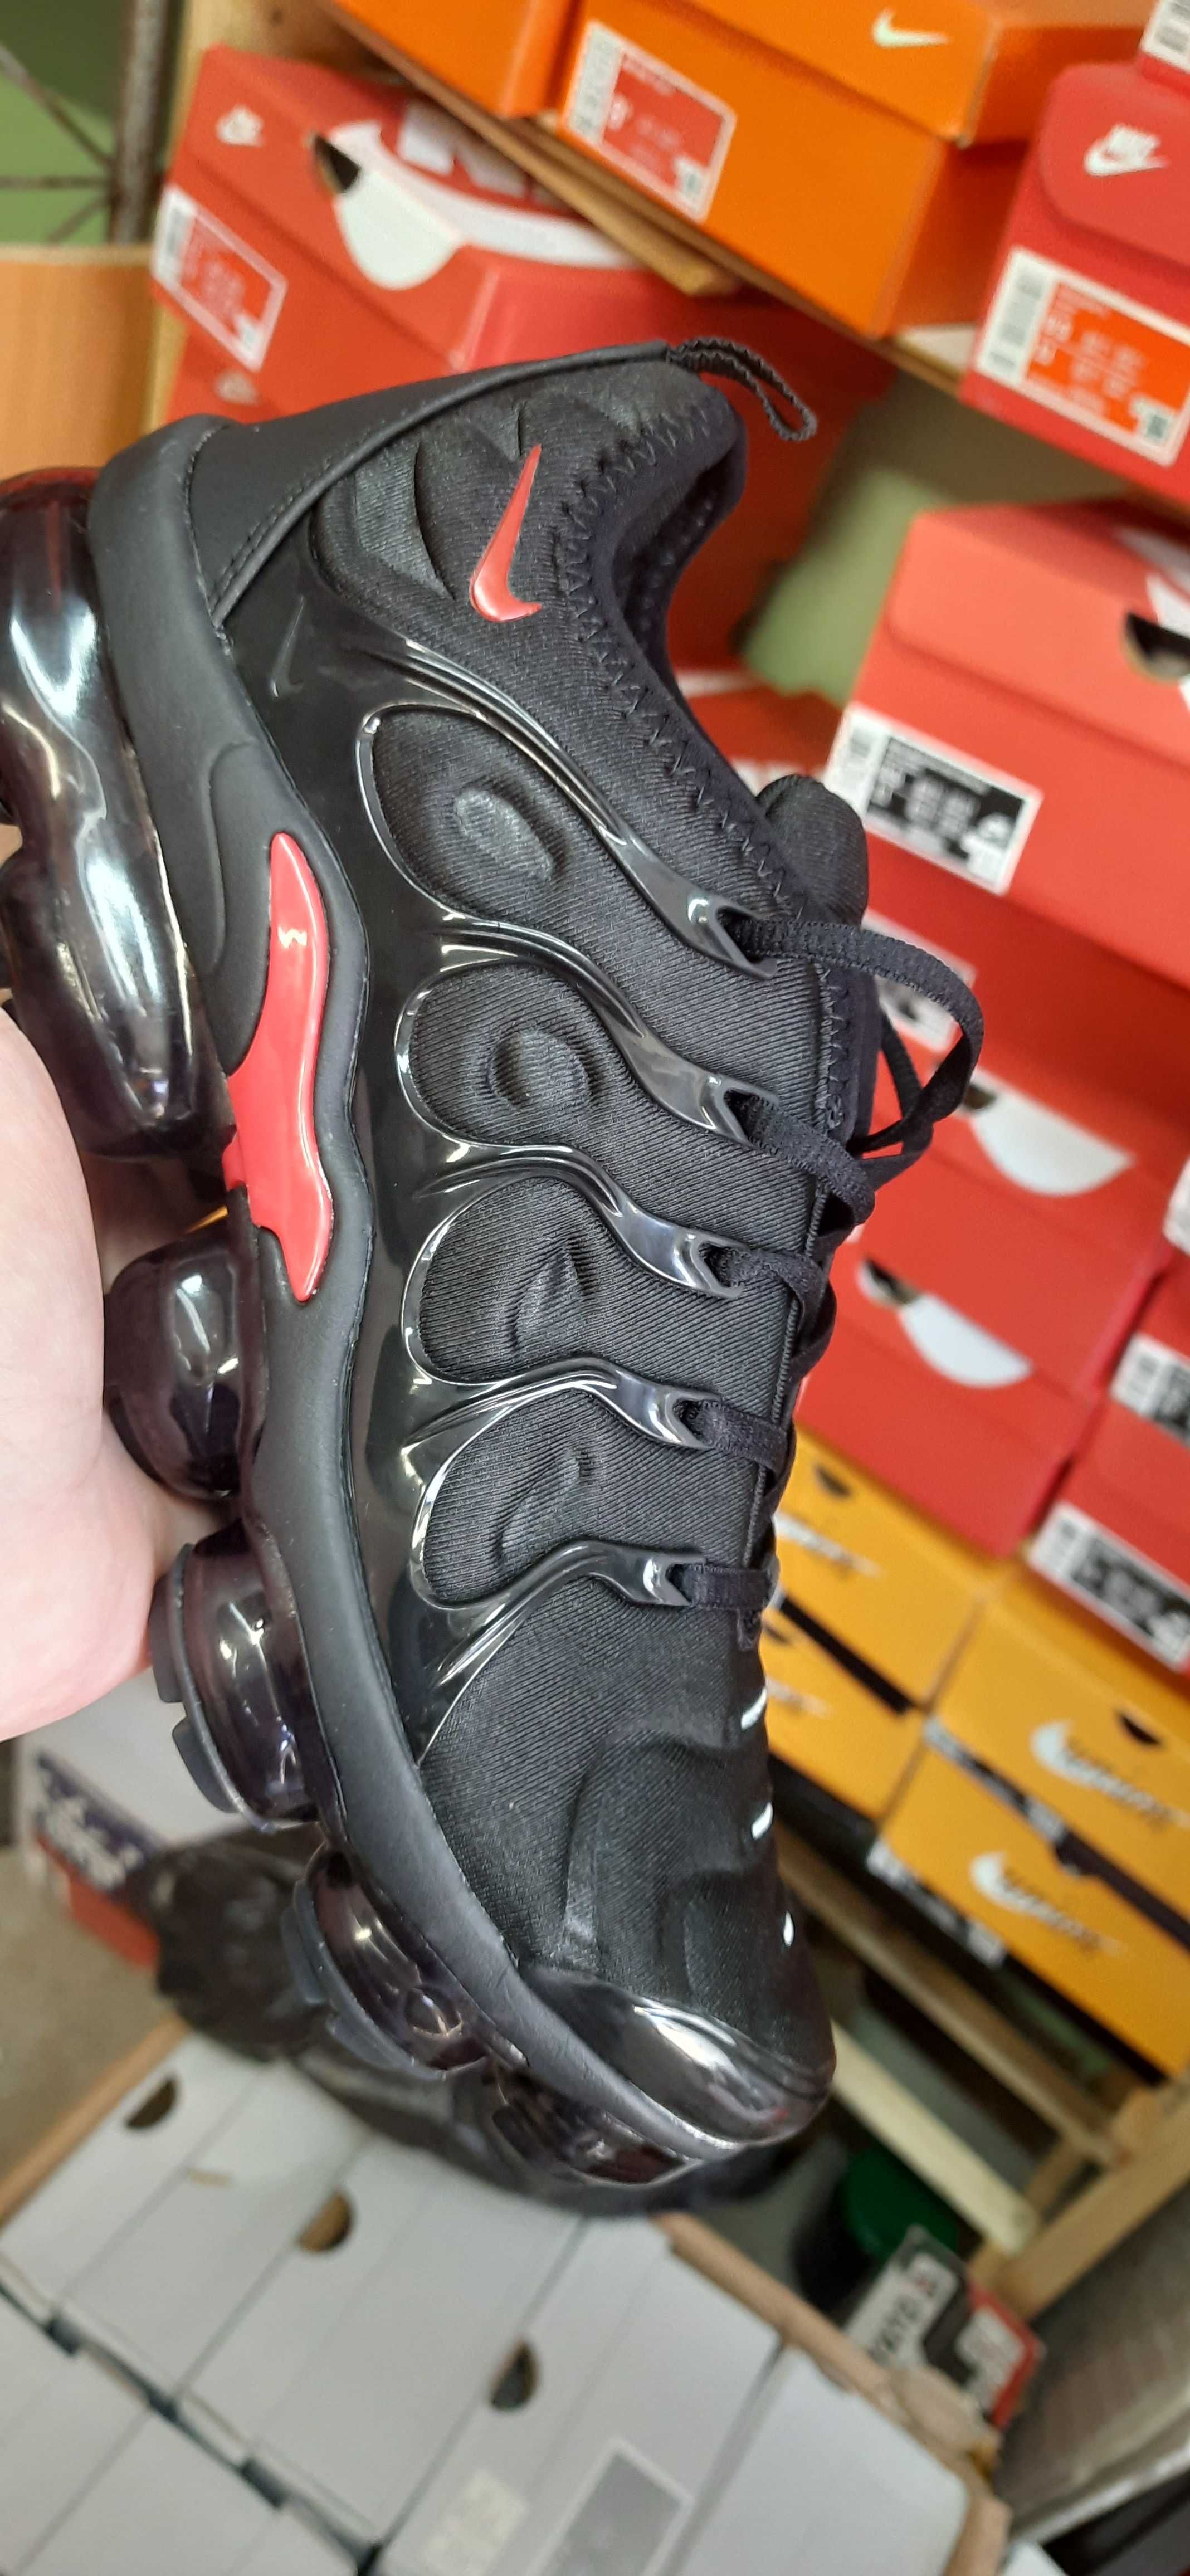 Nike air max vapormax black.red